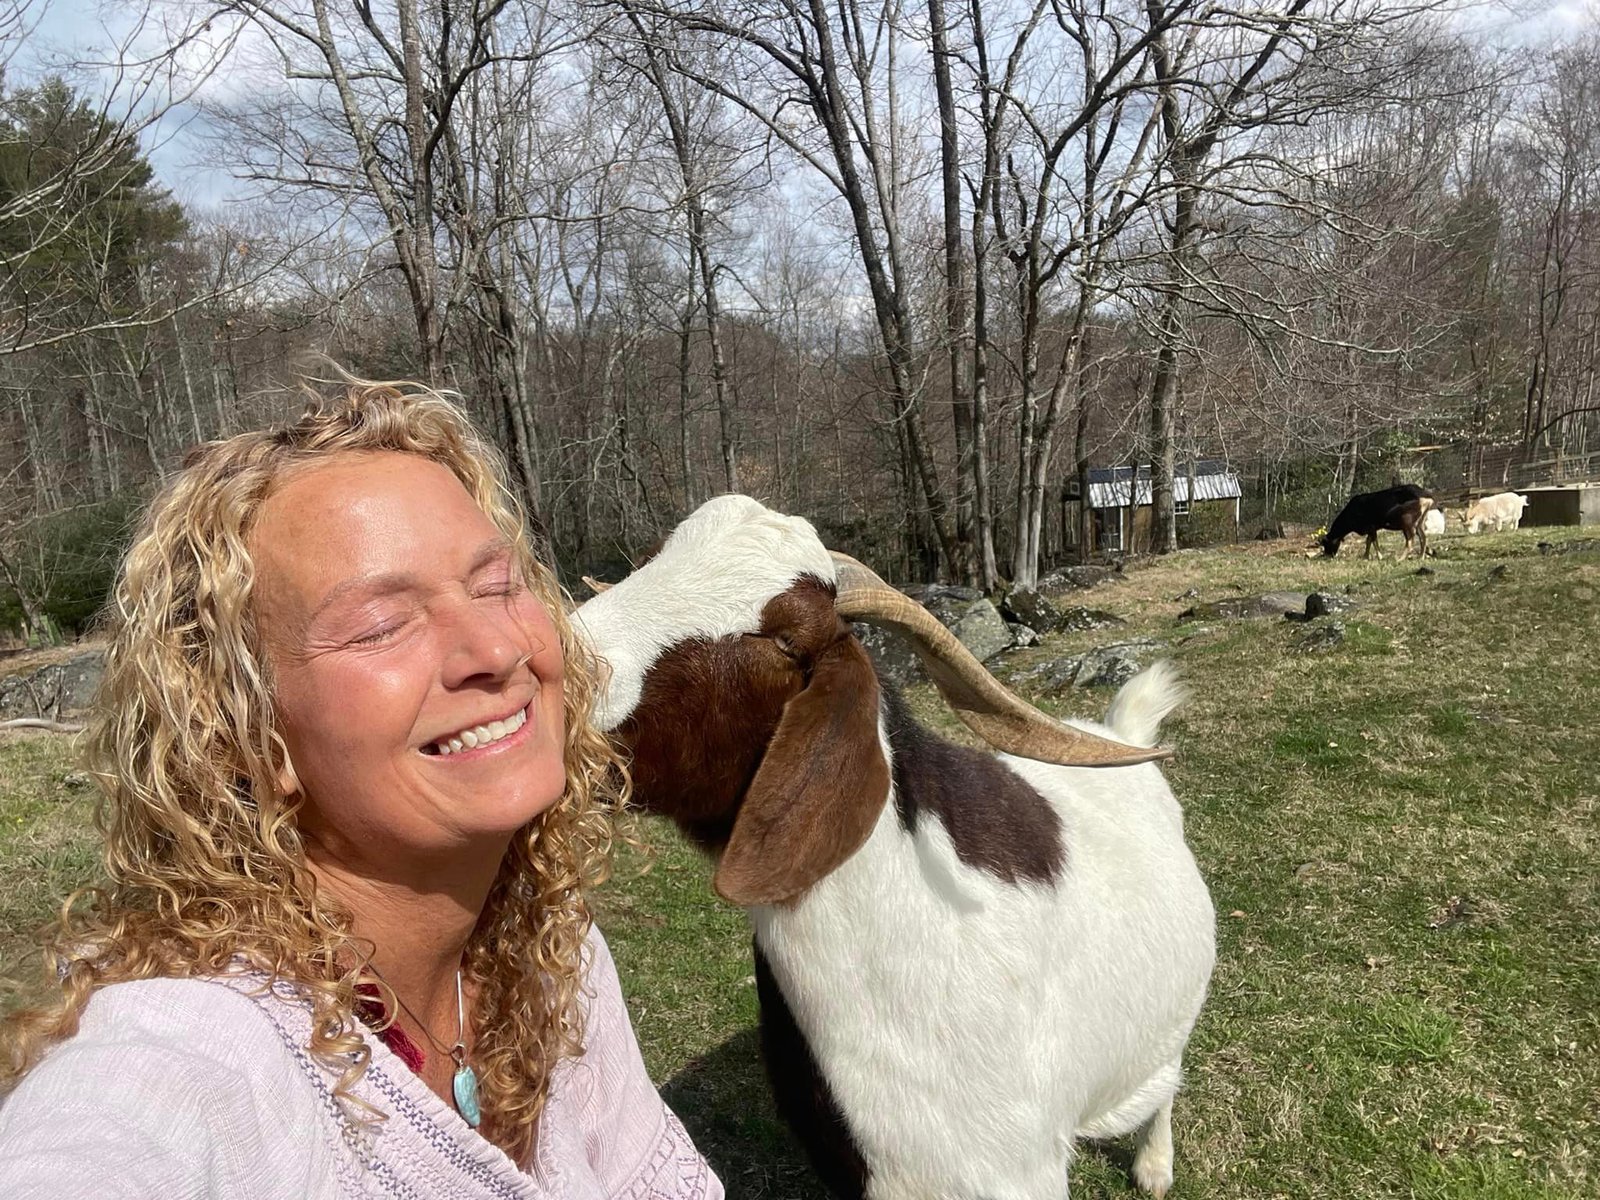 Goat-kiss